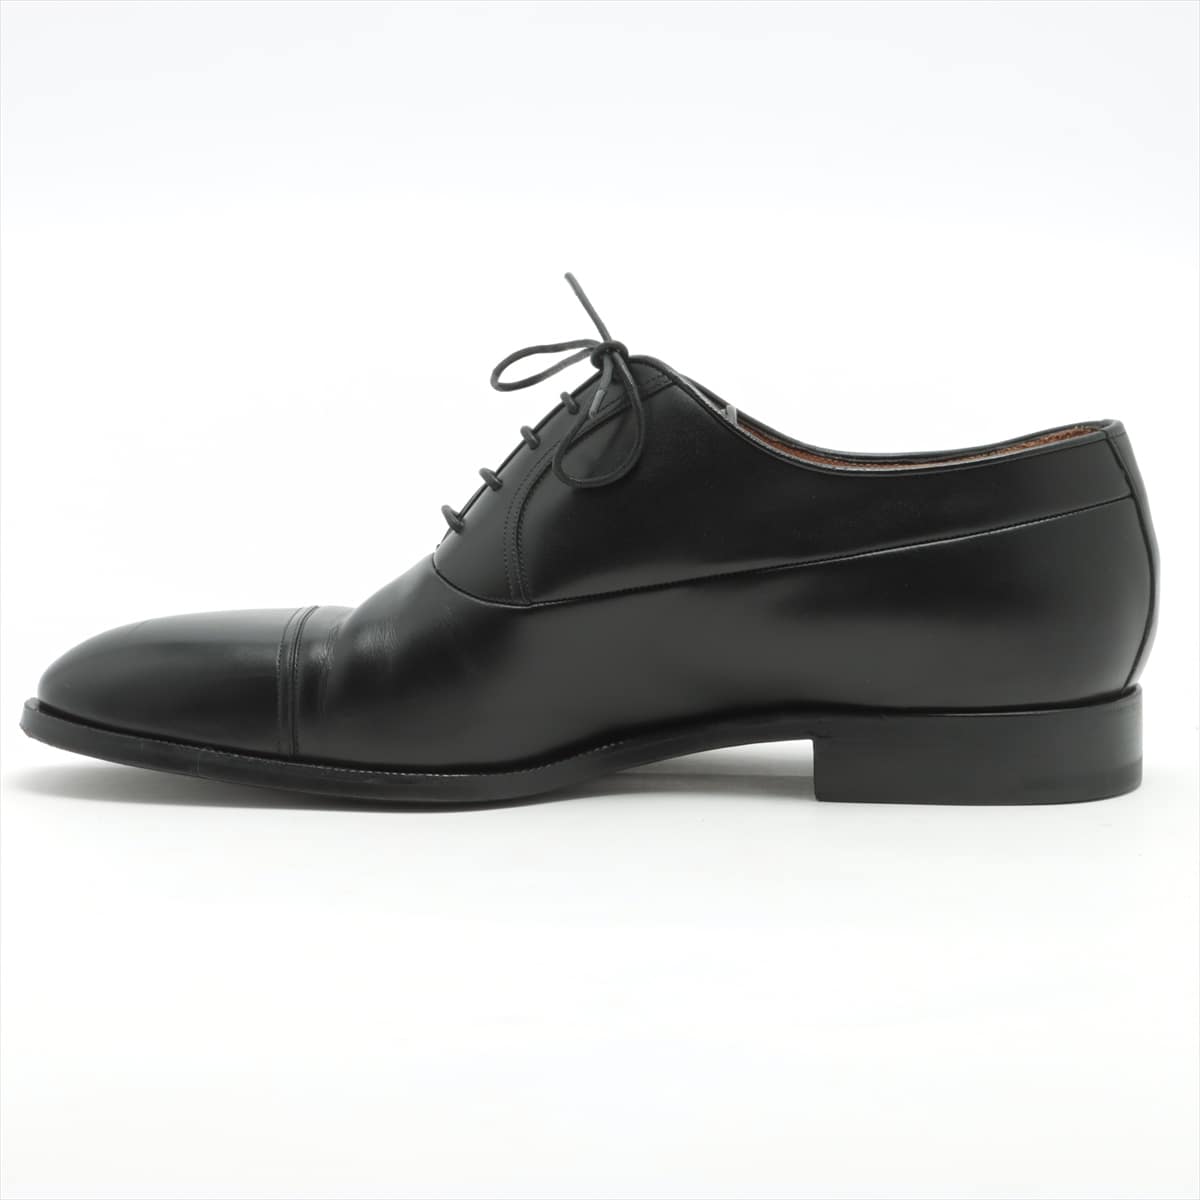 Berluti Leather Dress shoes 8 1/2 Men's Black Oxford 623 Straight tip